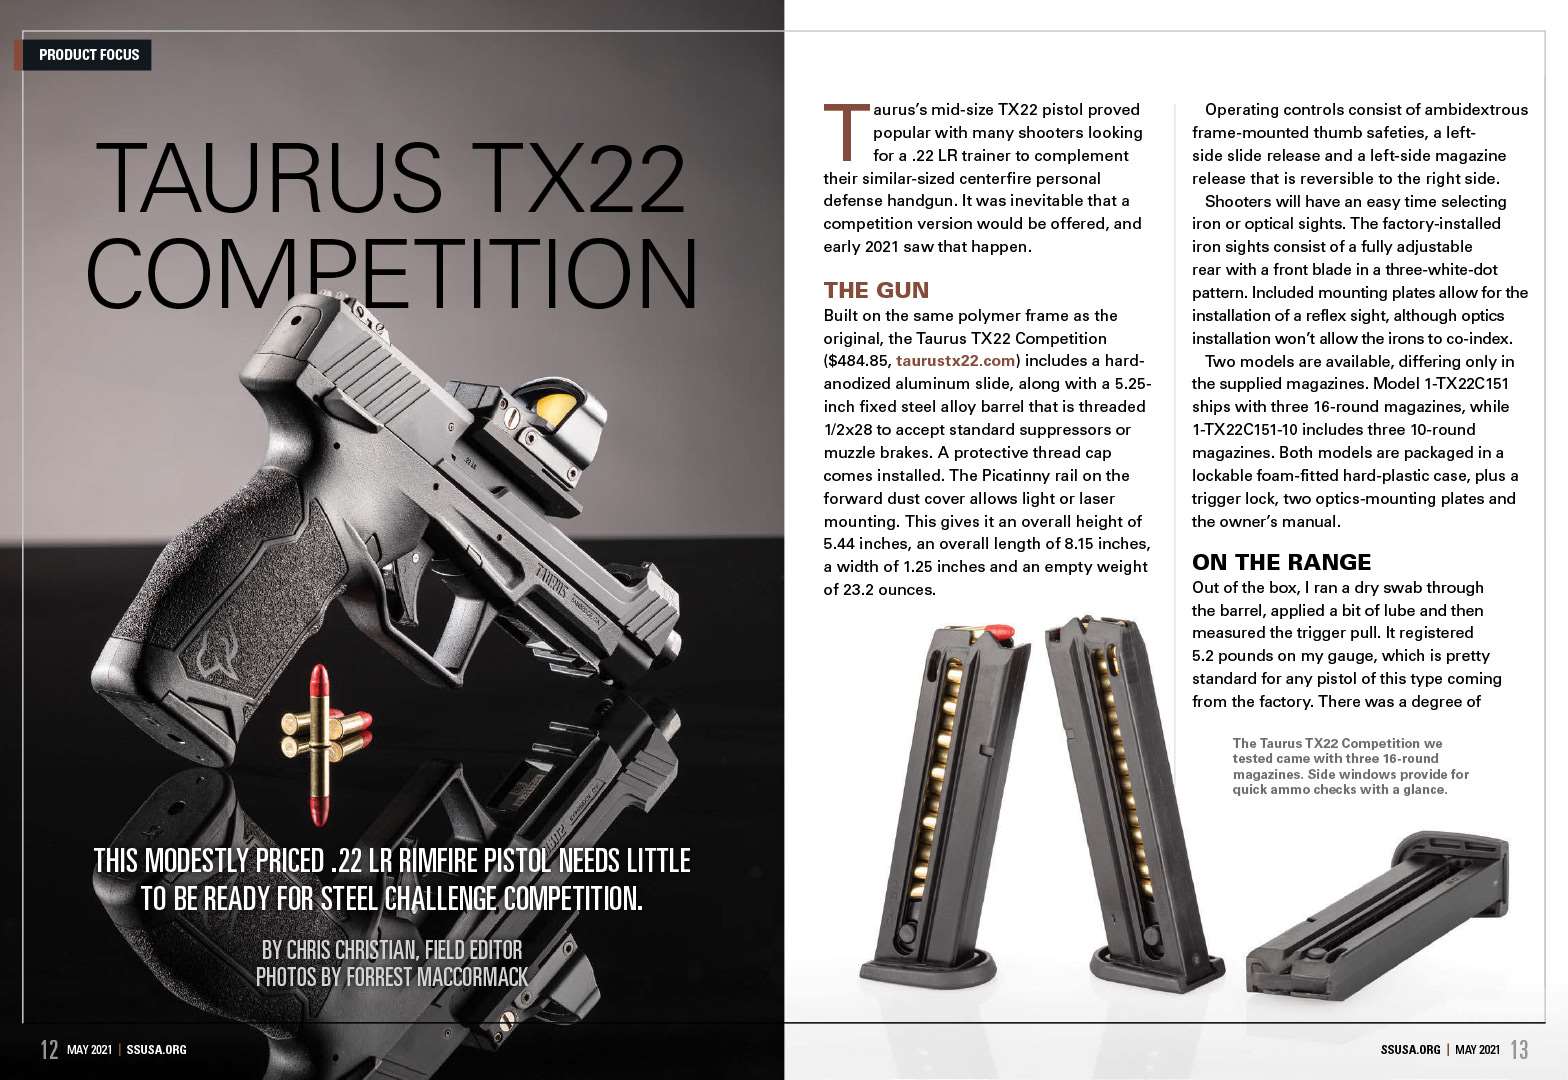 Taurus TX22 Competition